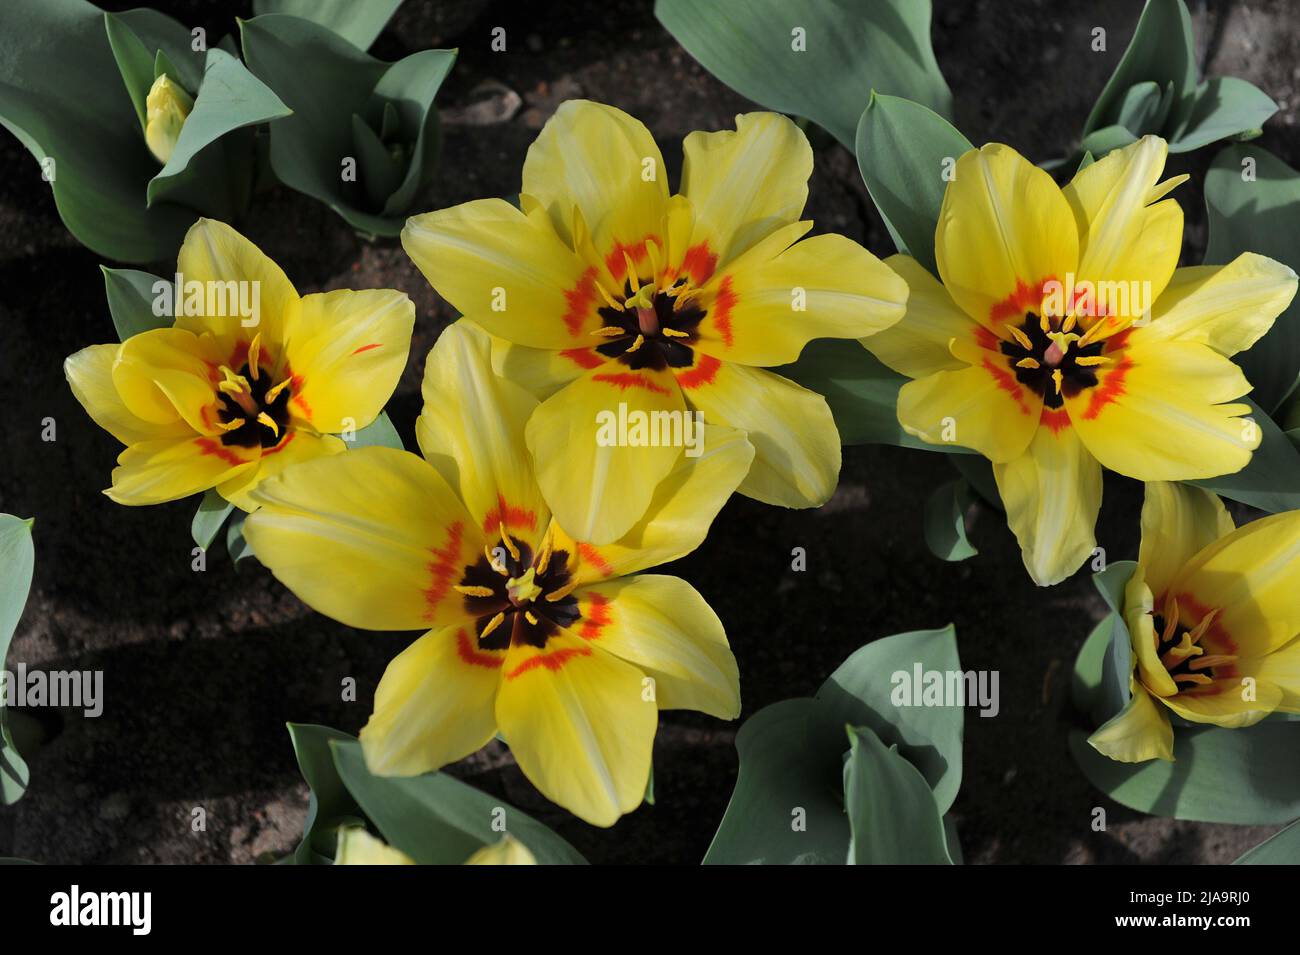 Gelbe Fosteriana Tulpen (Tulipa) Natura Artis Magistra blüht im April in einem Garten Stockfoto